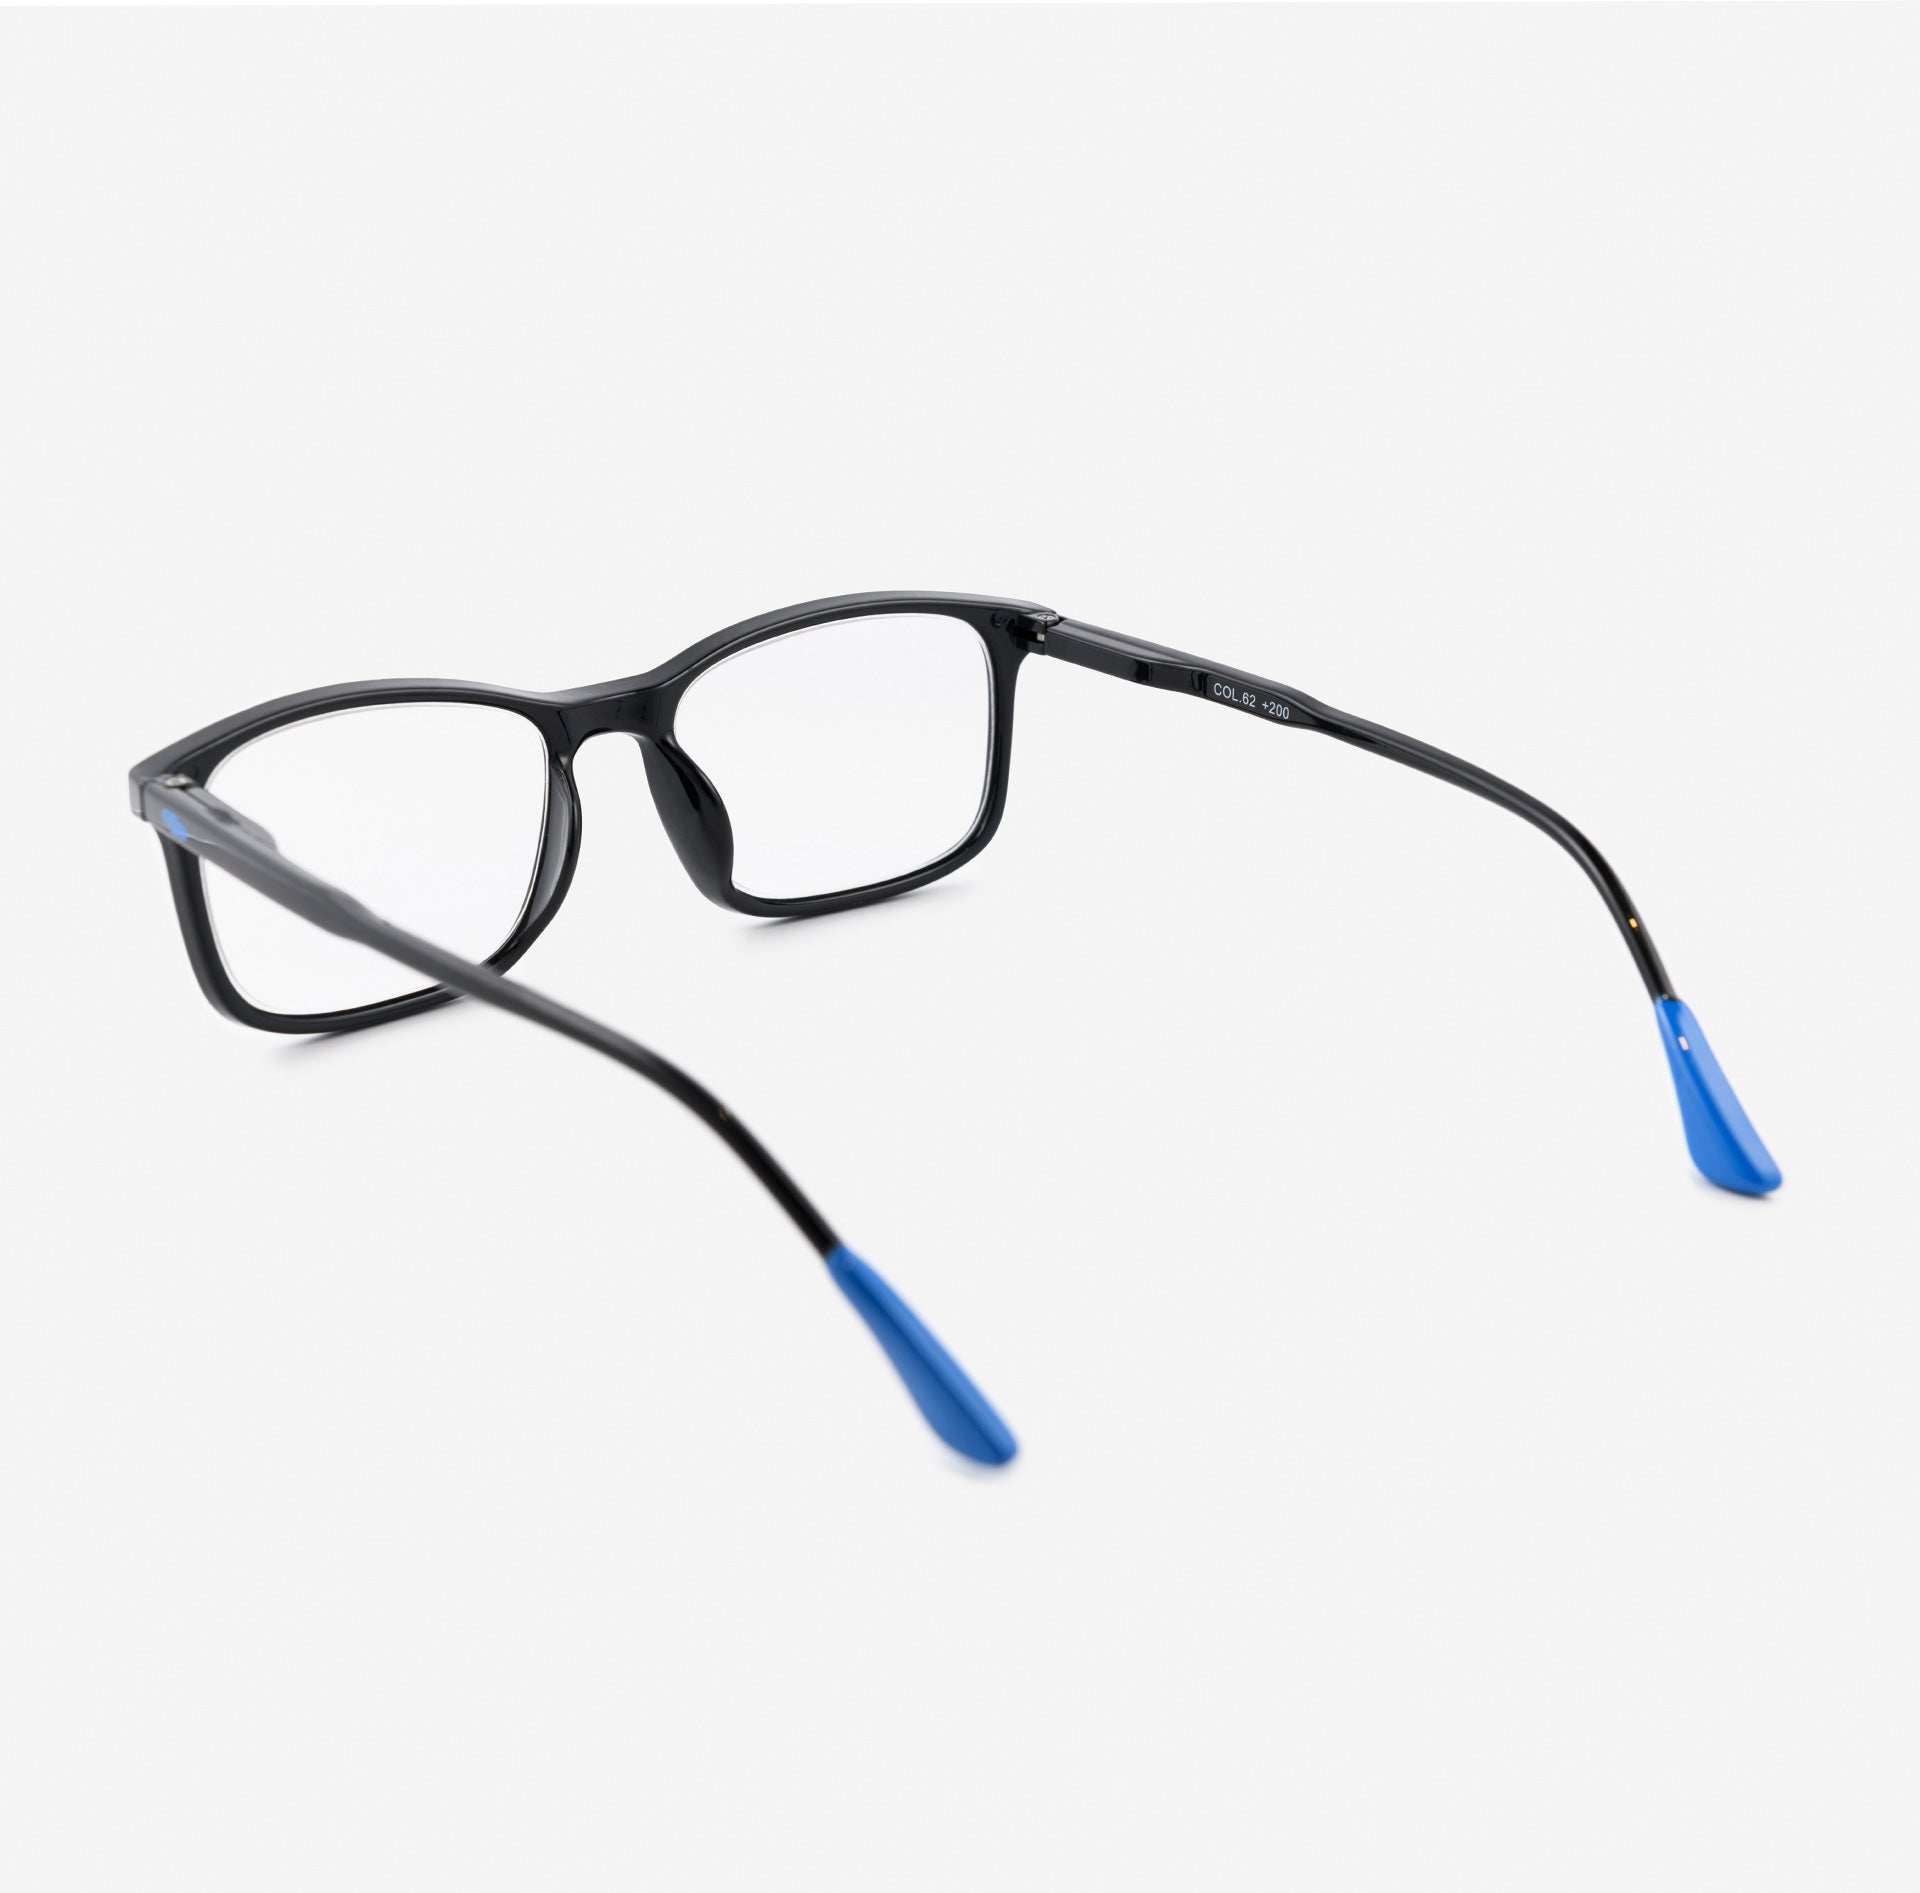 Black and blue square reading glasses